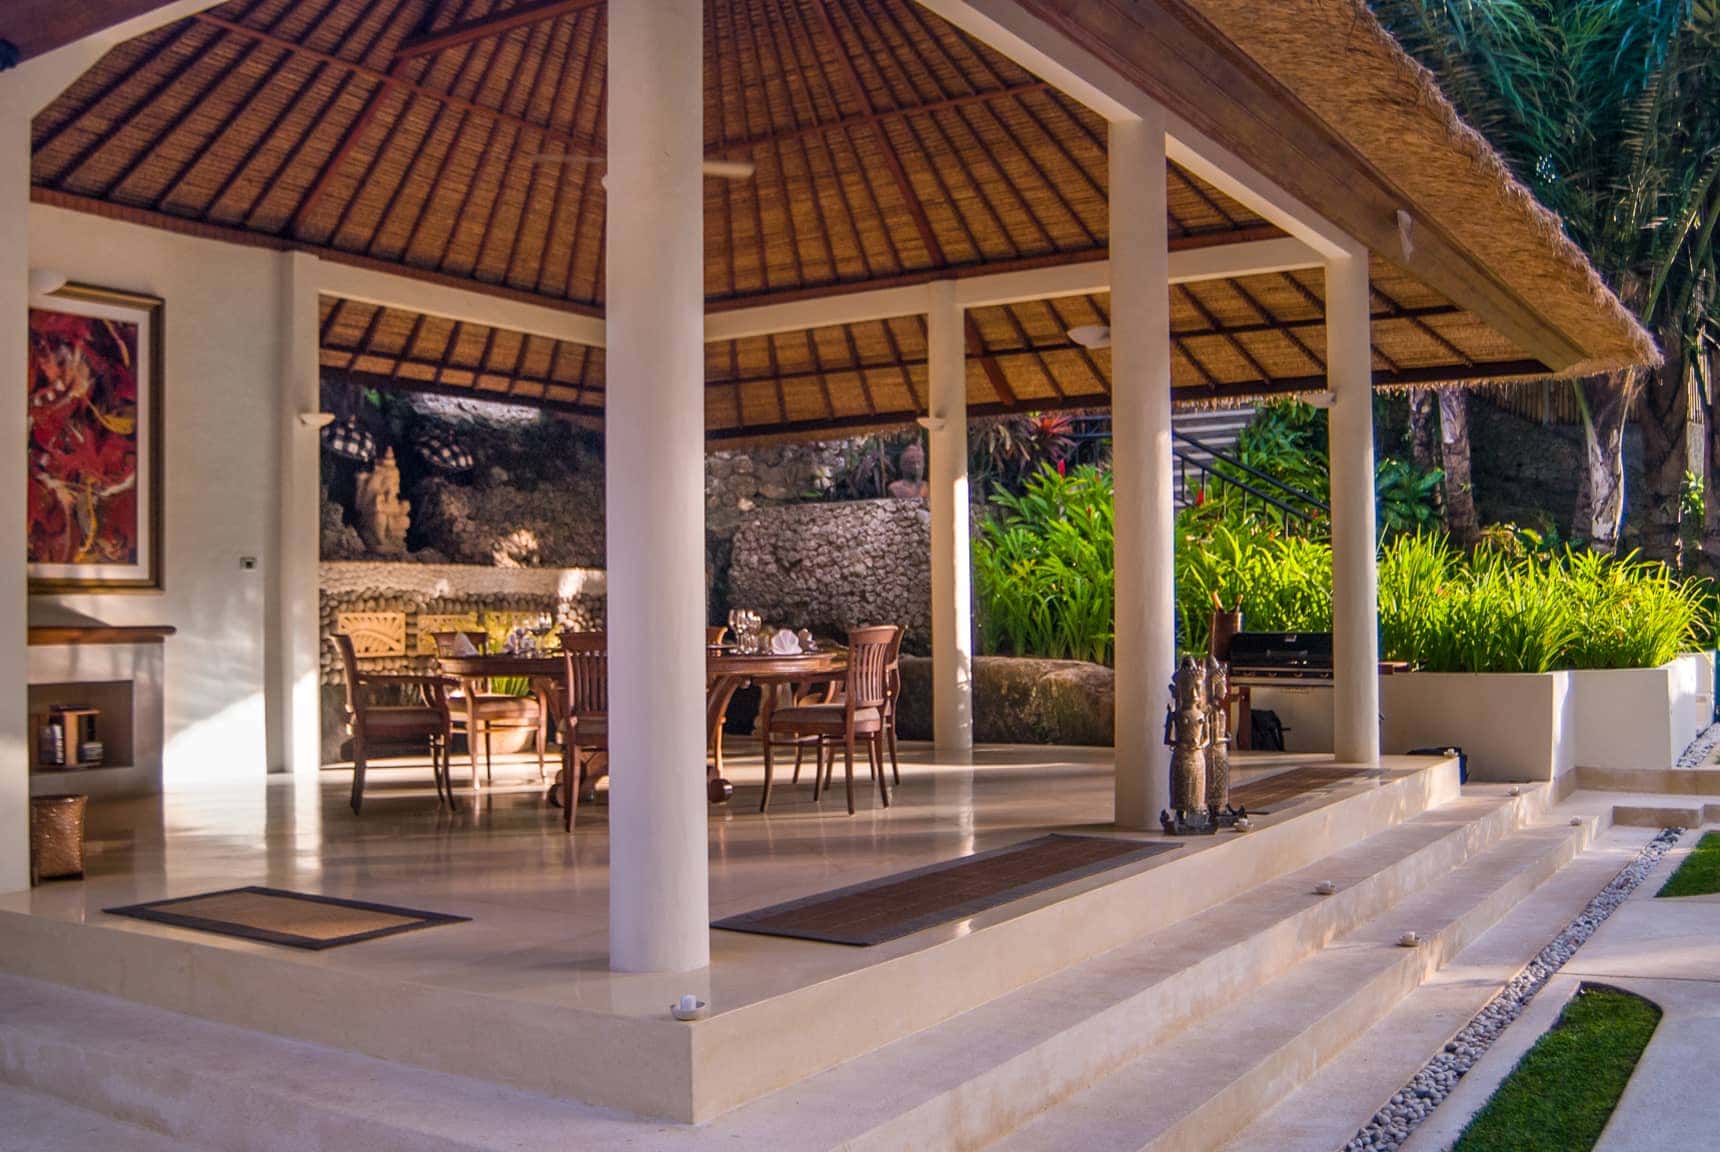 Villa Kembali - Canggu, Bali Indonesia (Bali villa photography by master photographer Rick Carmichael of LuxViz)